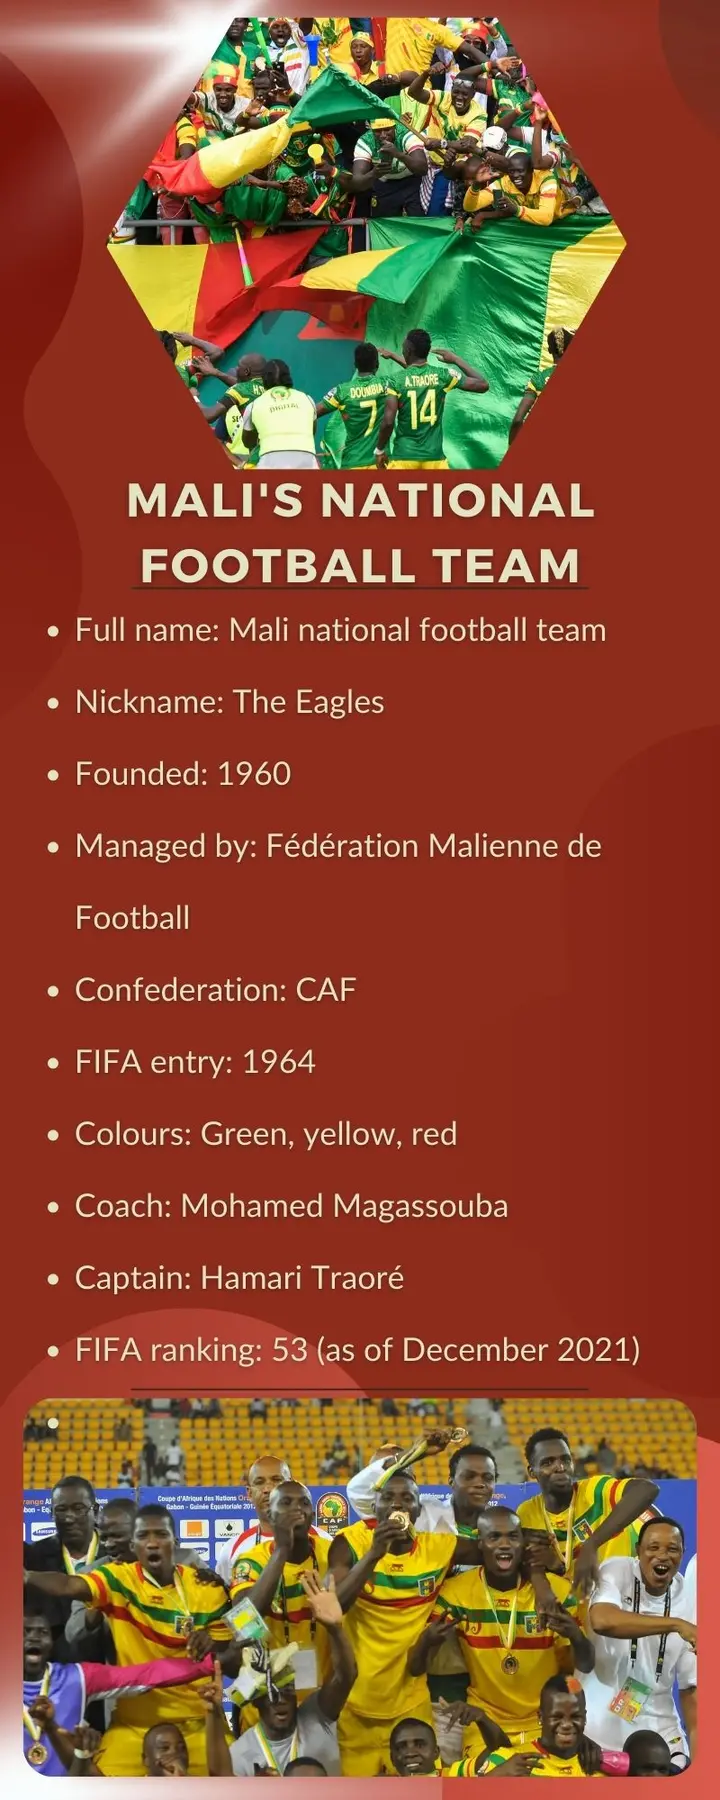 Mali's national football team